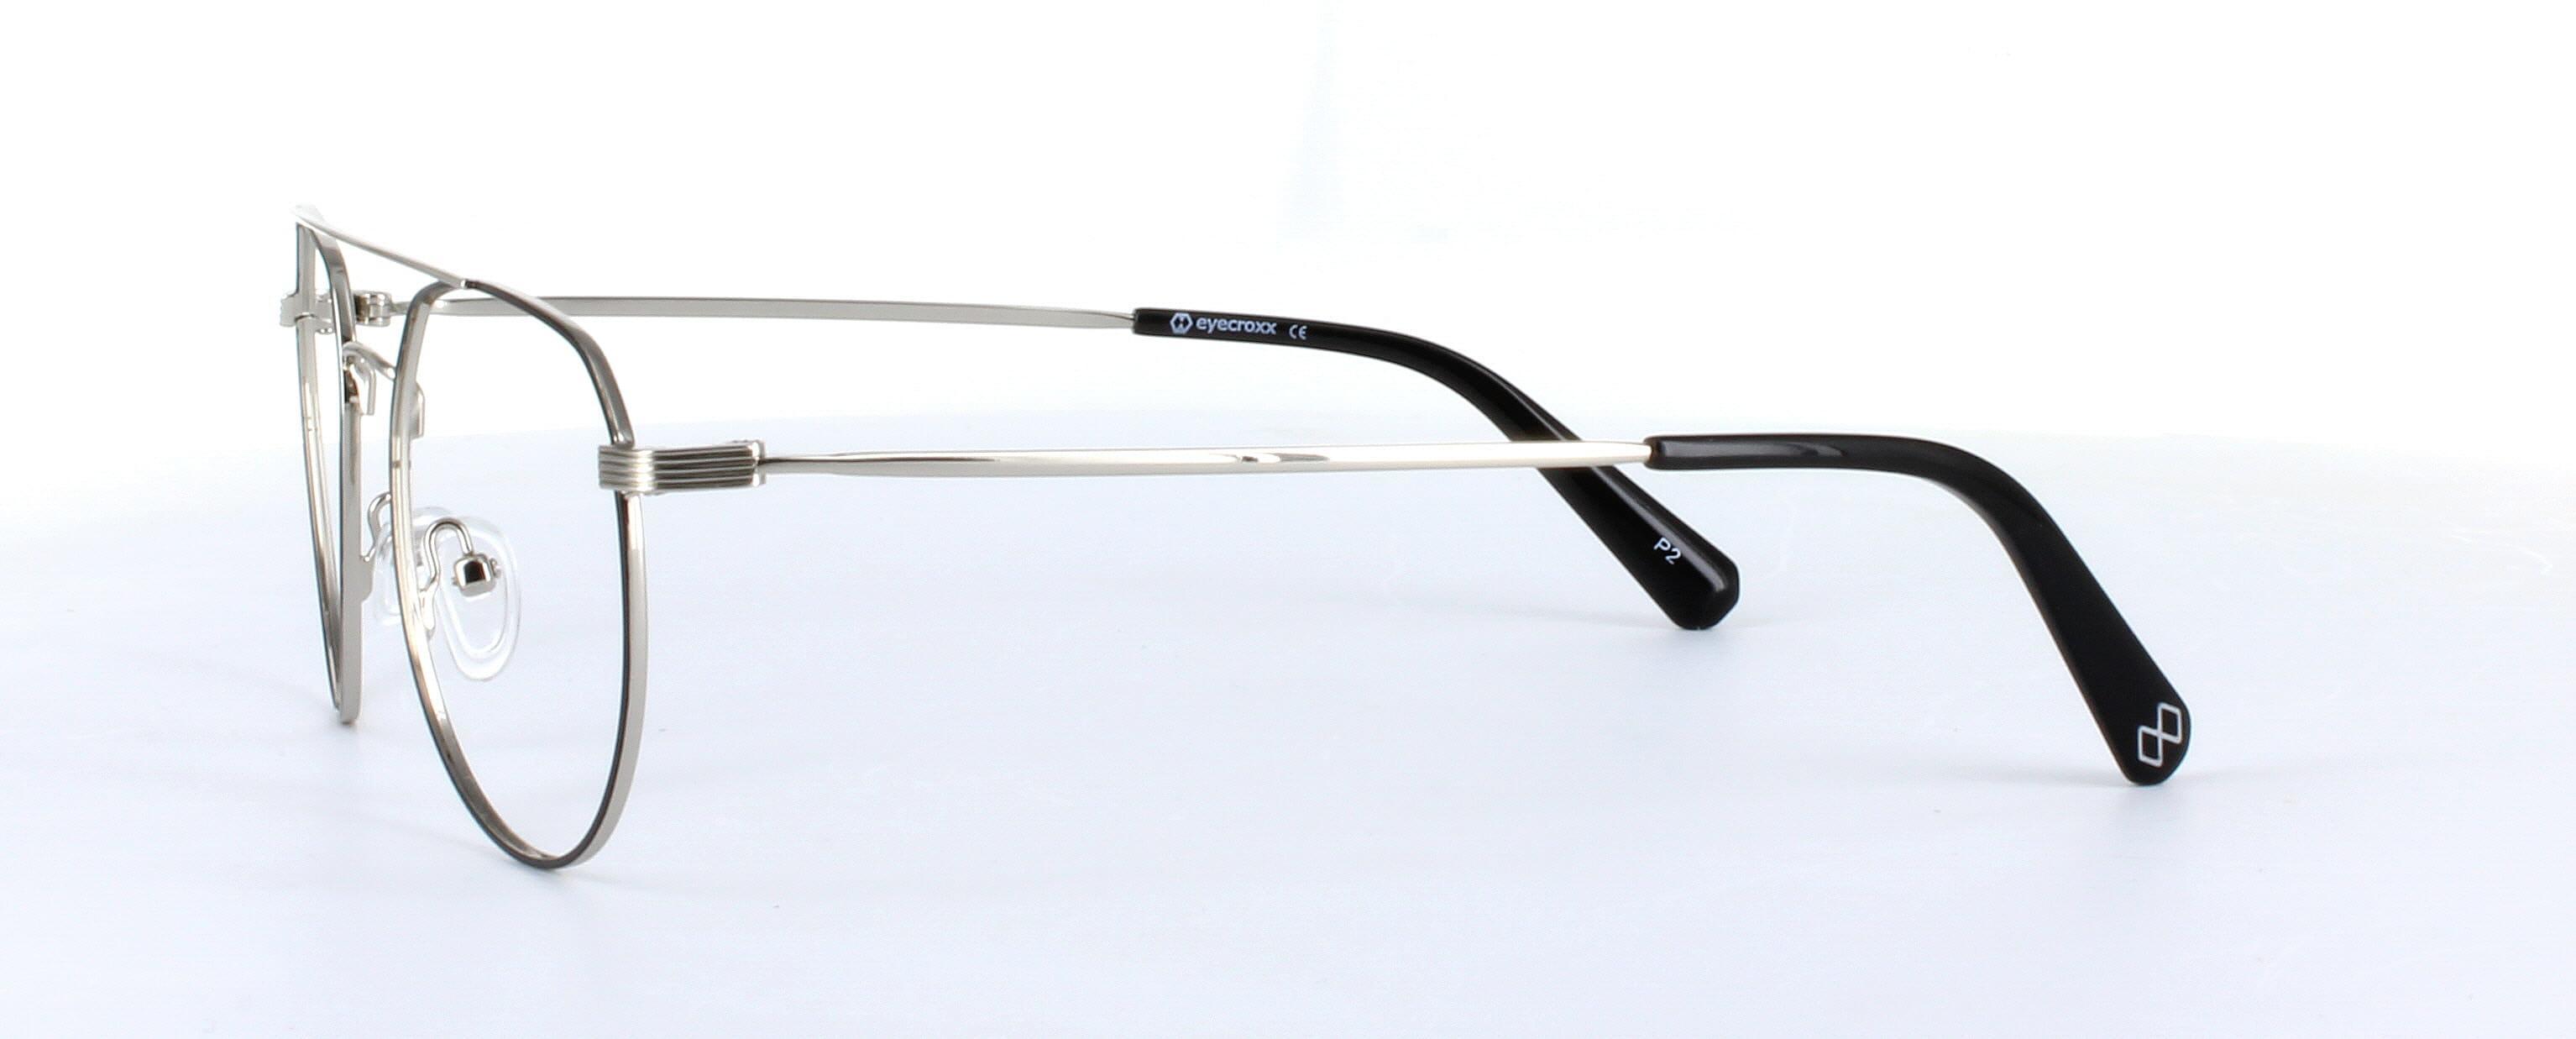 Eyecroxx 597-C3 Black and Gunmetal Full Rim Aviator Metal Glasses - Image View 2